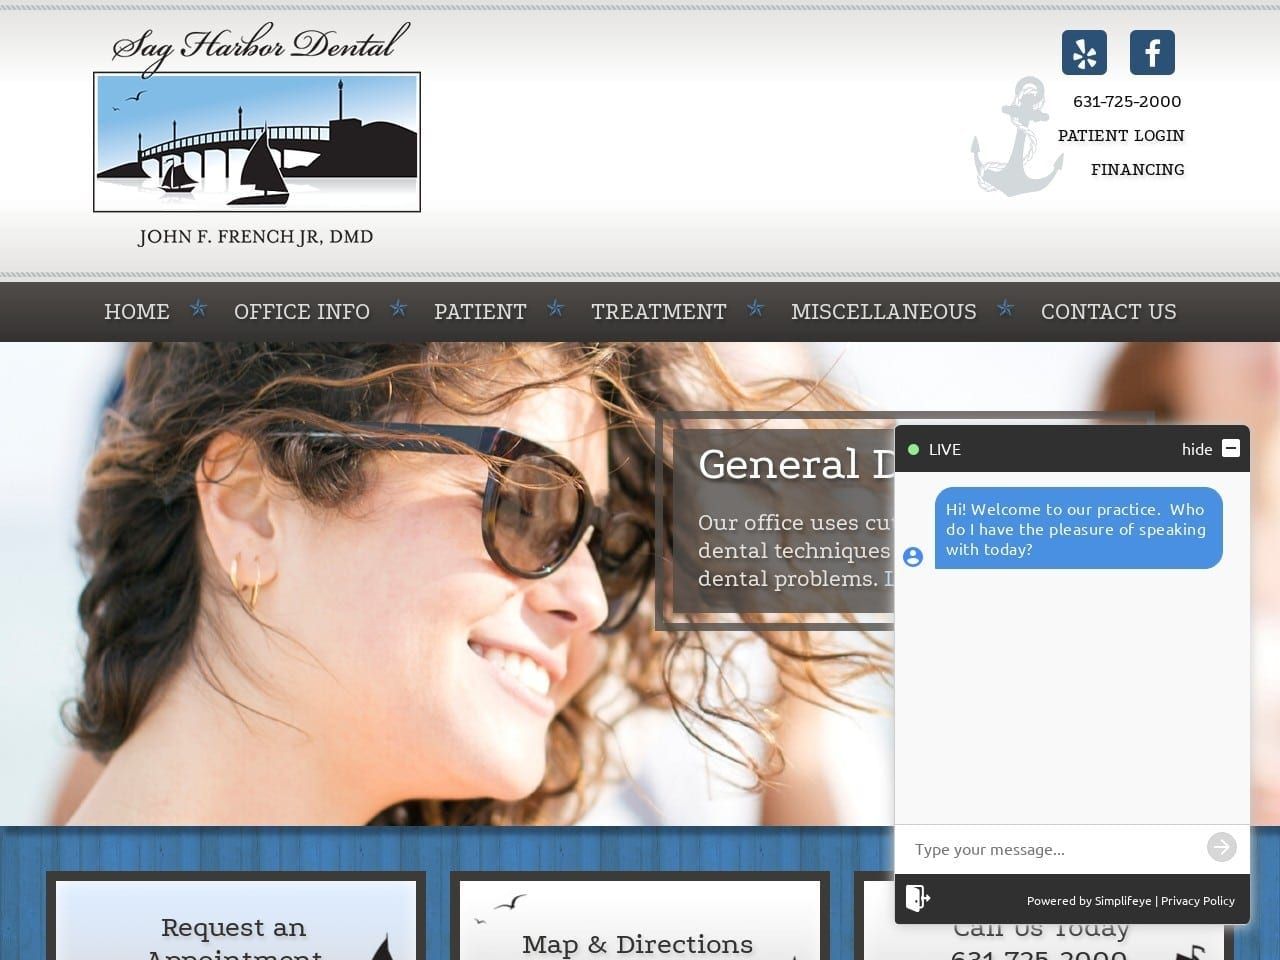 French John F DMD Website Screenshot from sagharbordental.com